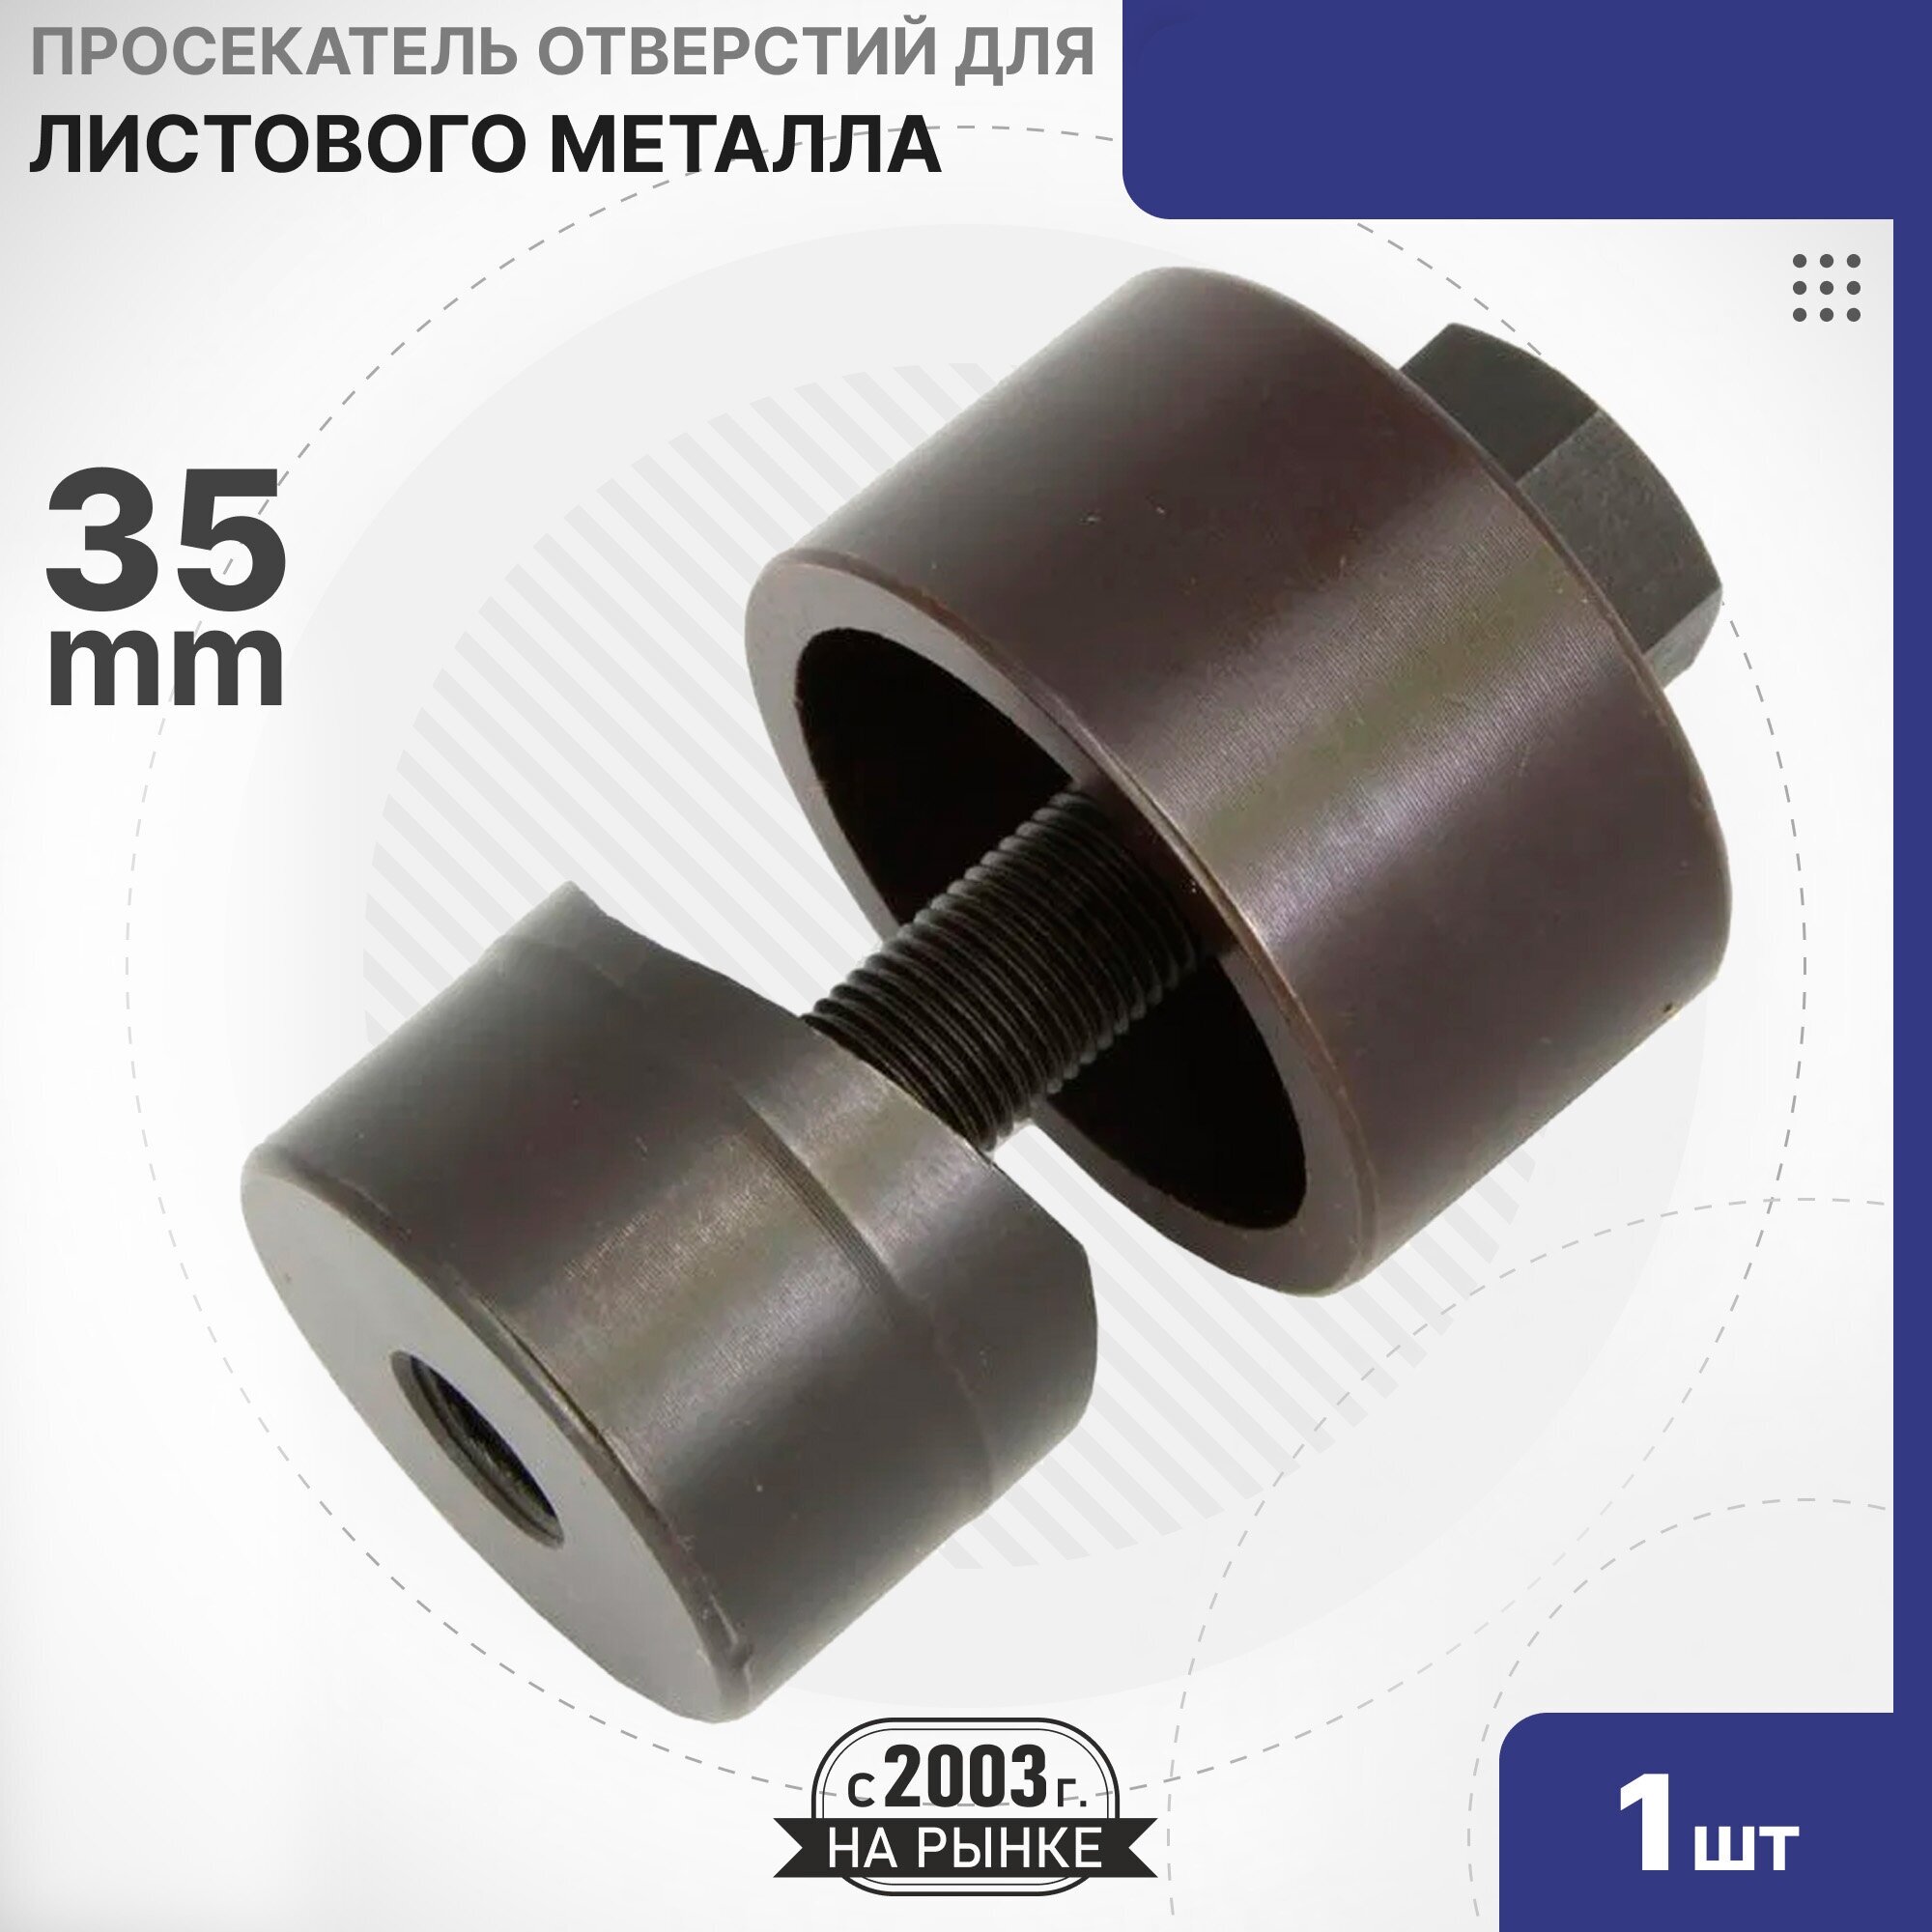 Просекатель листового металла Mr.Logo, диаметр 35 мм